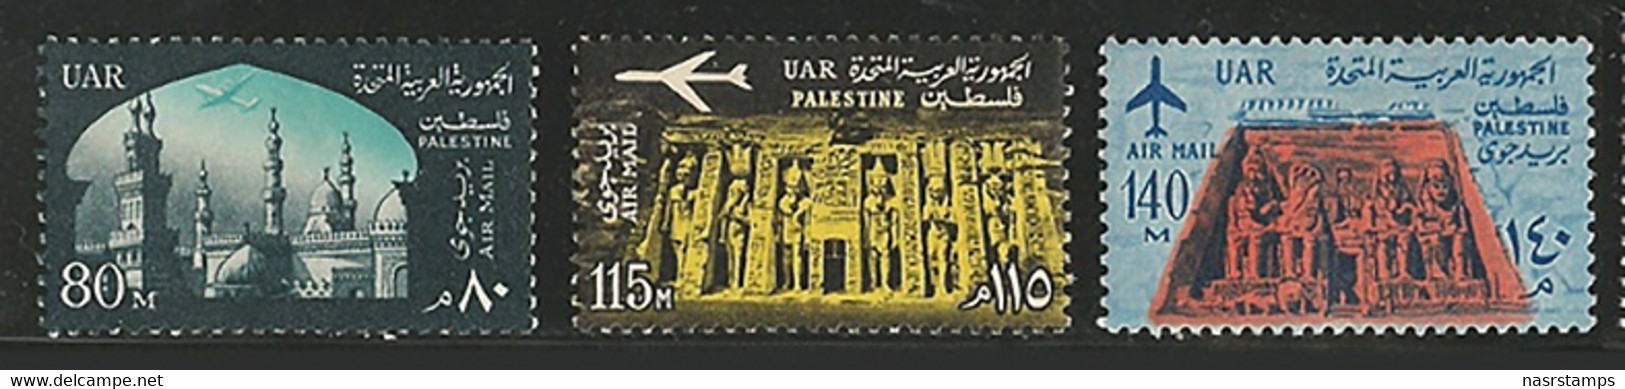 Egypt - 1963 - Palestine Issue - ( Temple Of Queen Nefertari, Abu Simbel ) - MNH (**) - Egyptologie